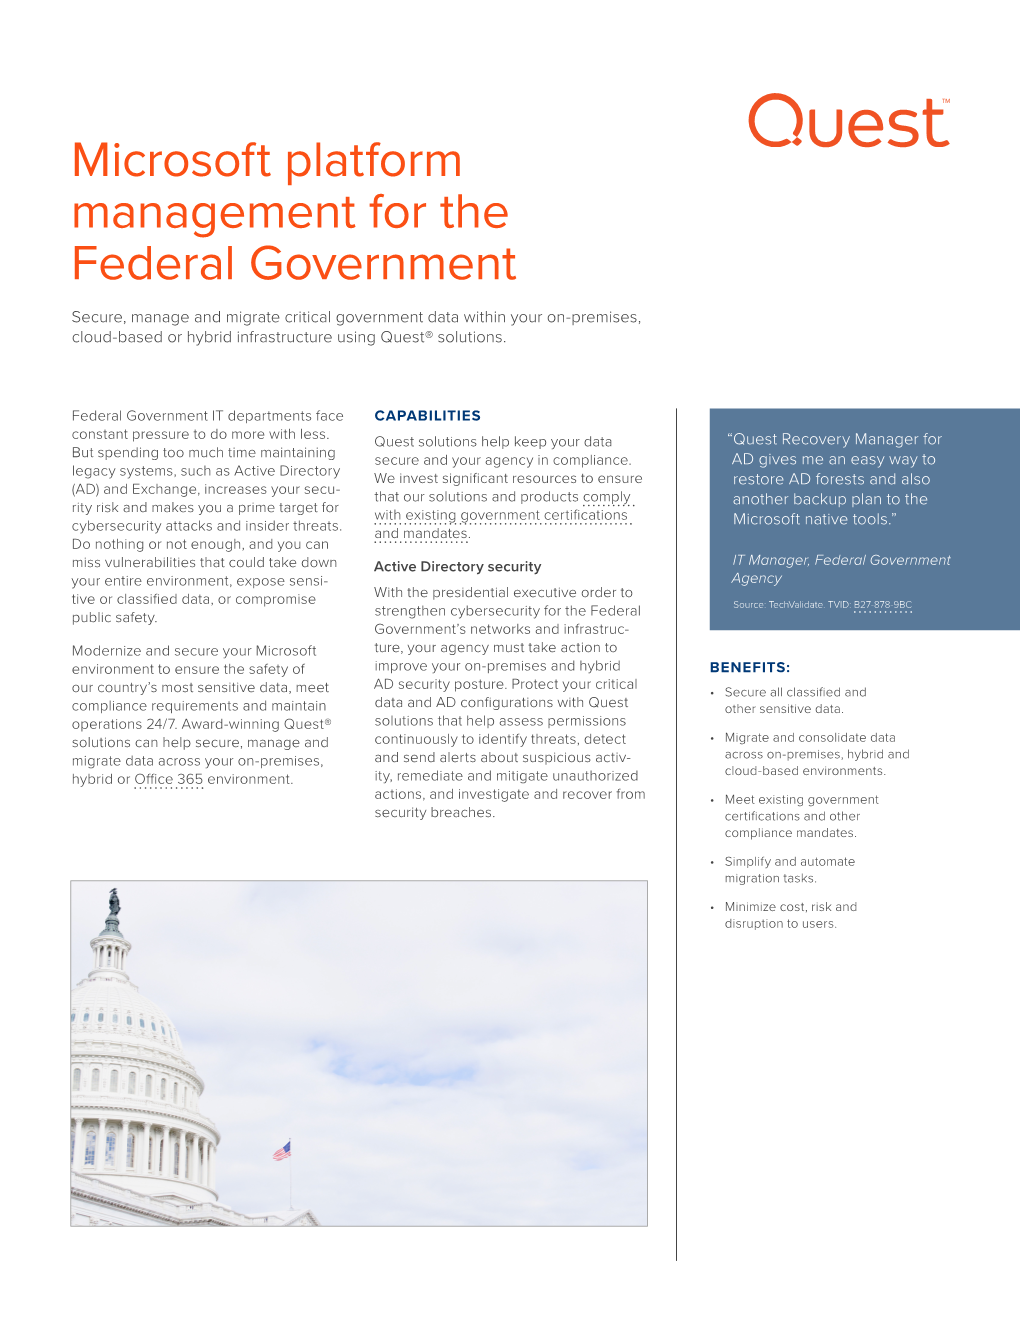 Microsoft Platform Management Solutions for Federal Government